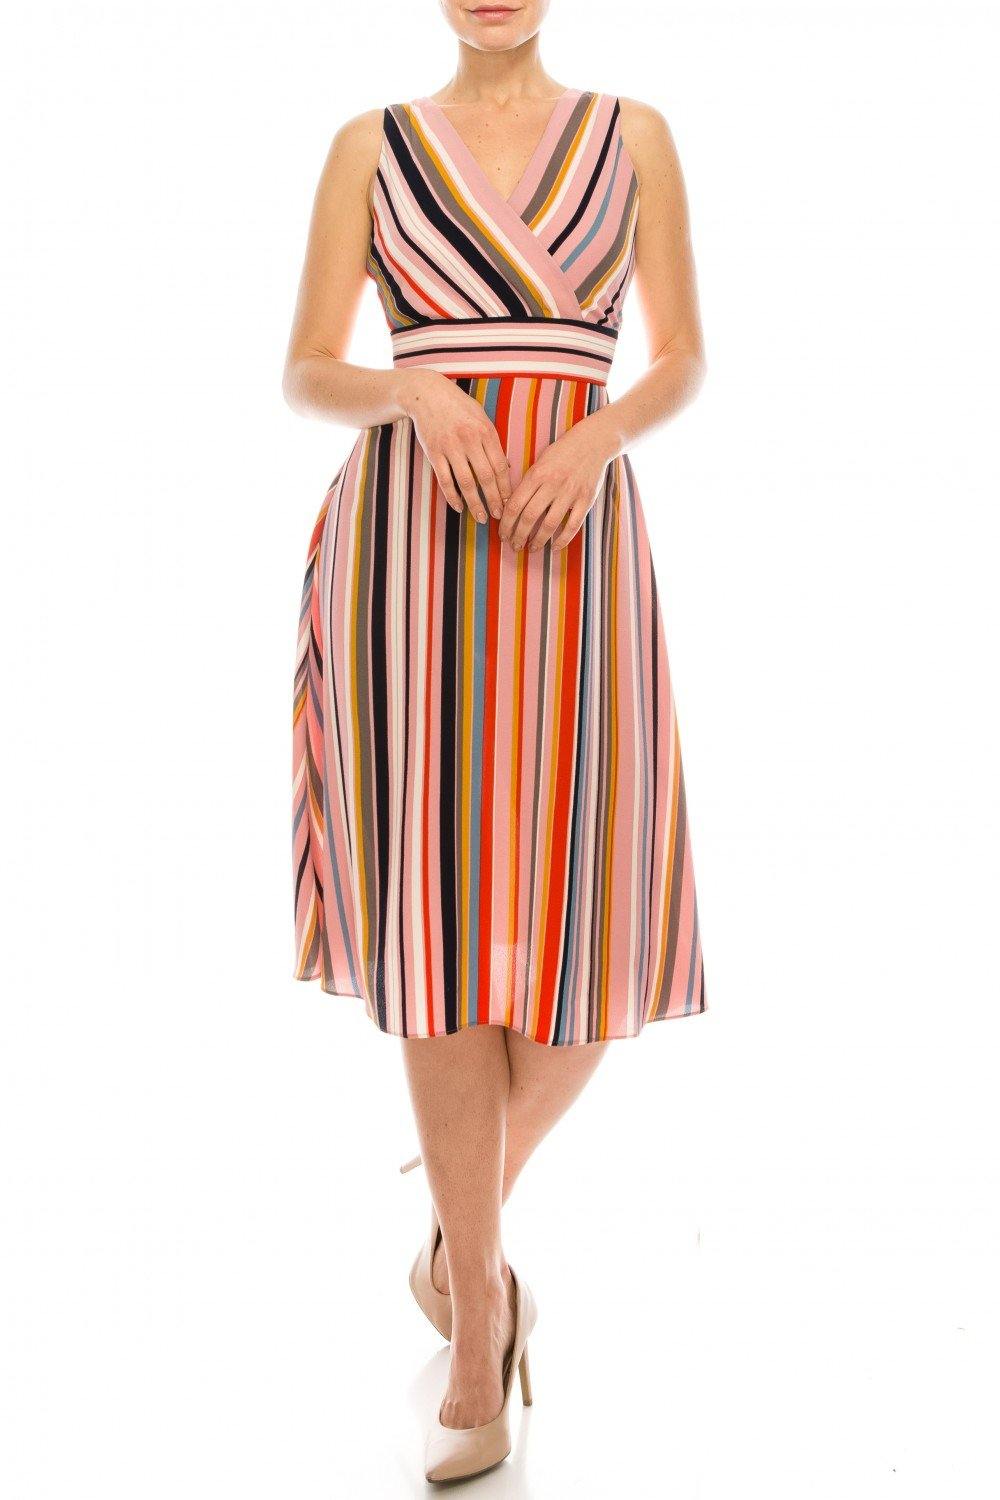 London Times Striped Surplice A-Line Dress - The Dress Outlet